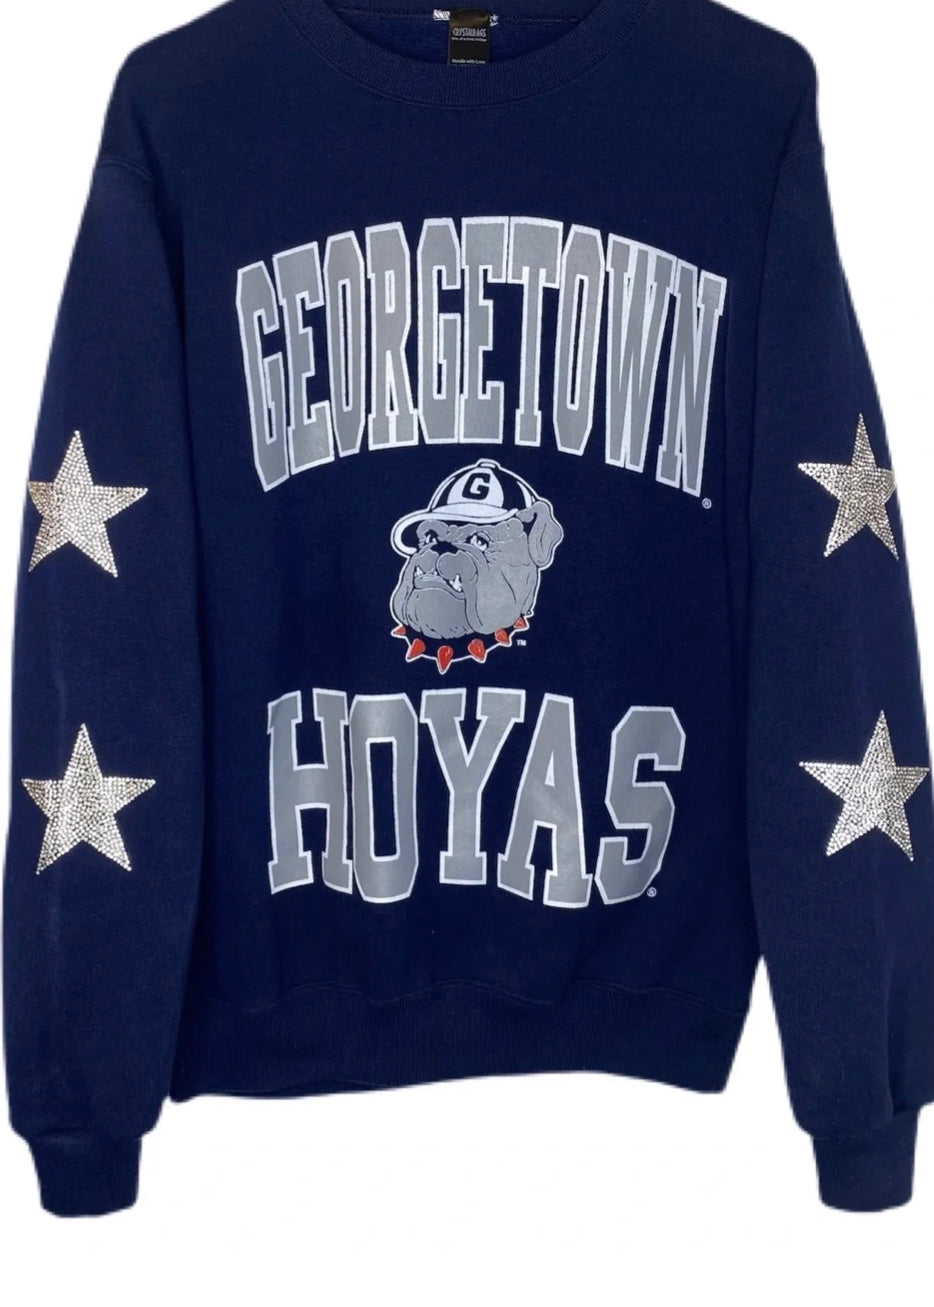 Georgetown University, Hoyas One of a KIND Vintage Sweatshirt with Crystal Star Design